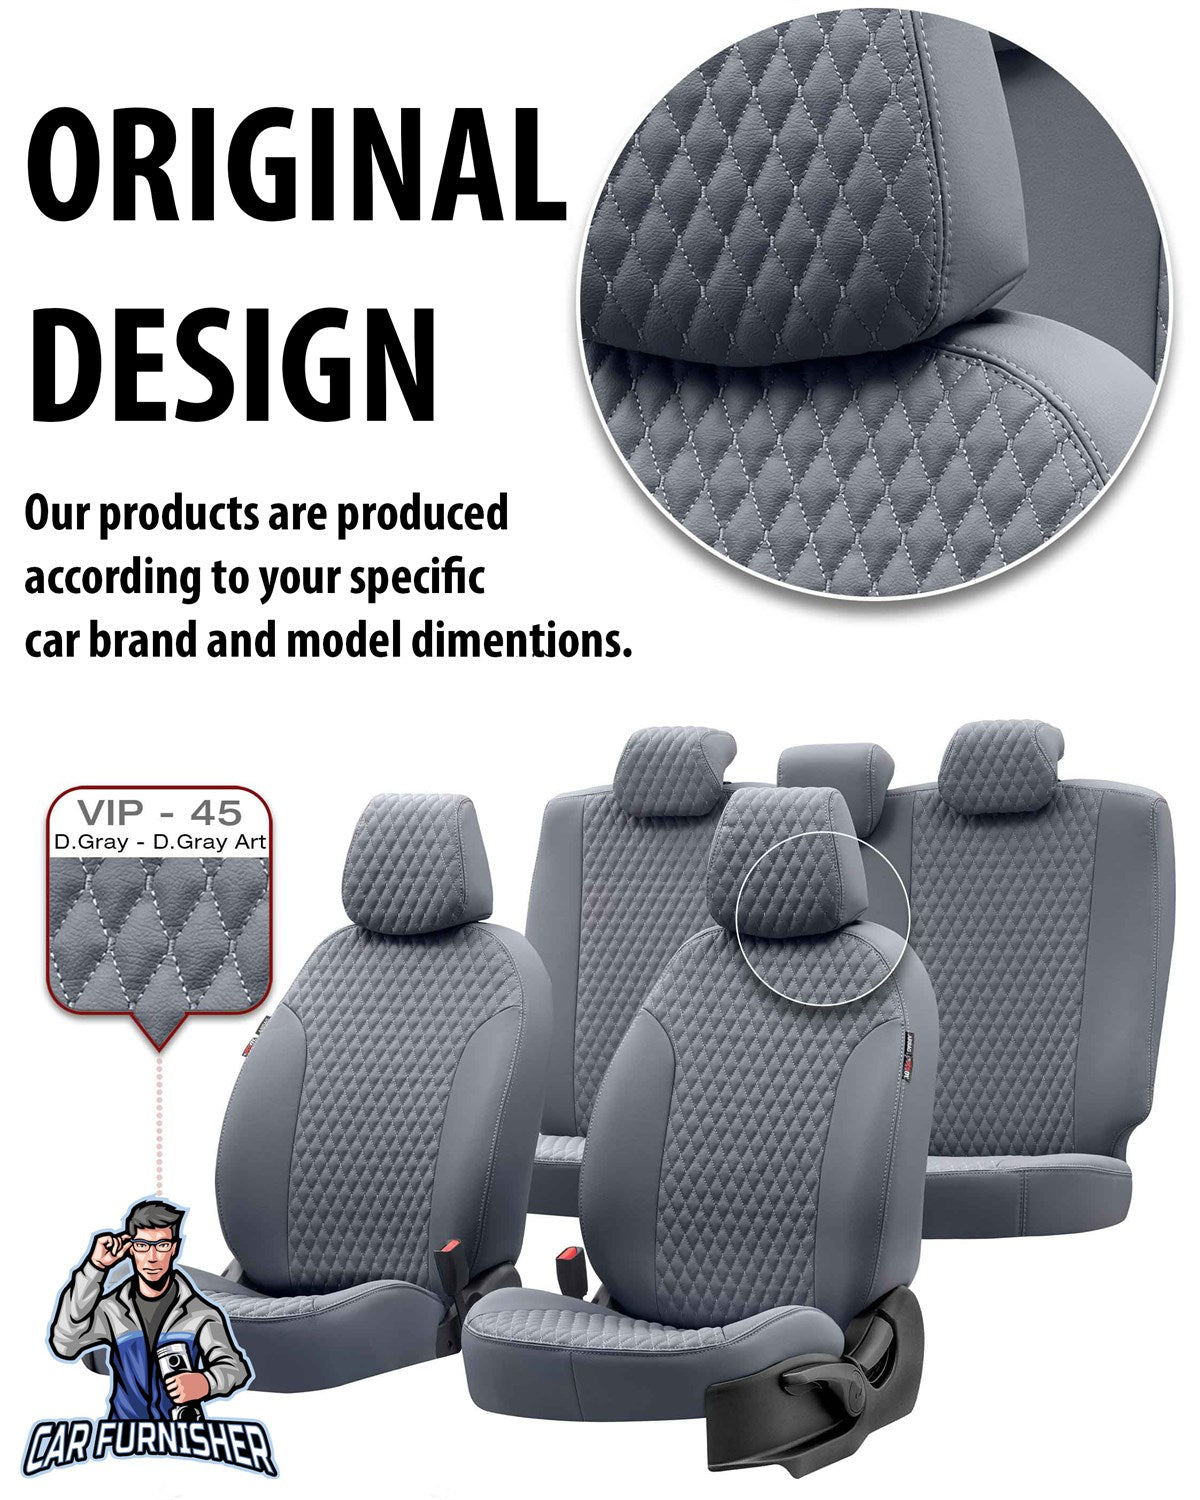 Renault Kadjar Seat Covers Amsterdam Leather Design Red Leather